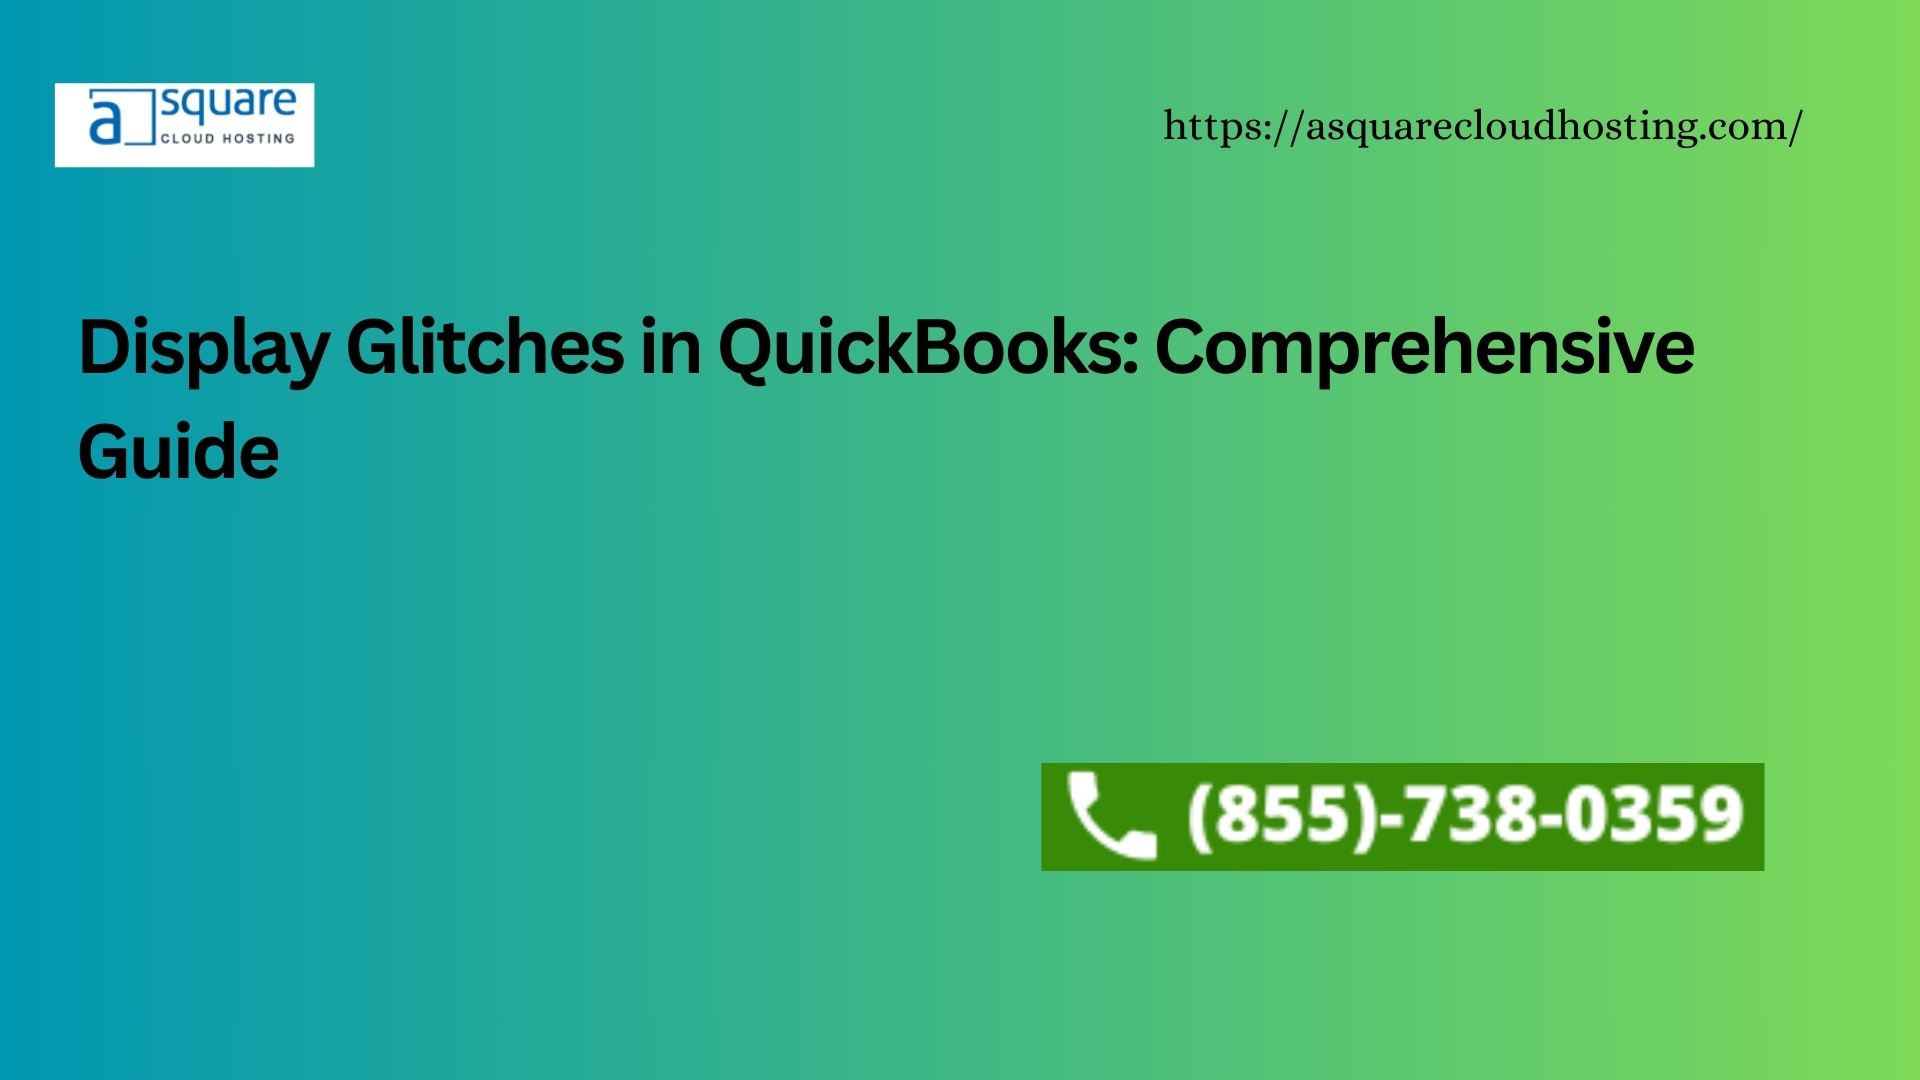 Display Glitches in QuickBooks Comprehensive Guide